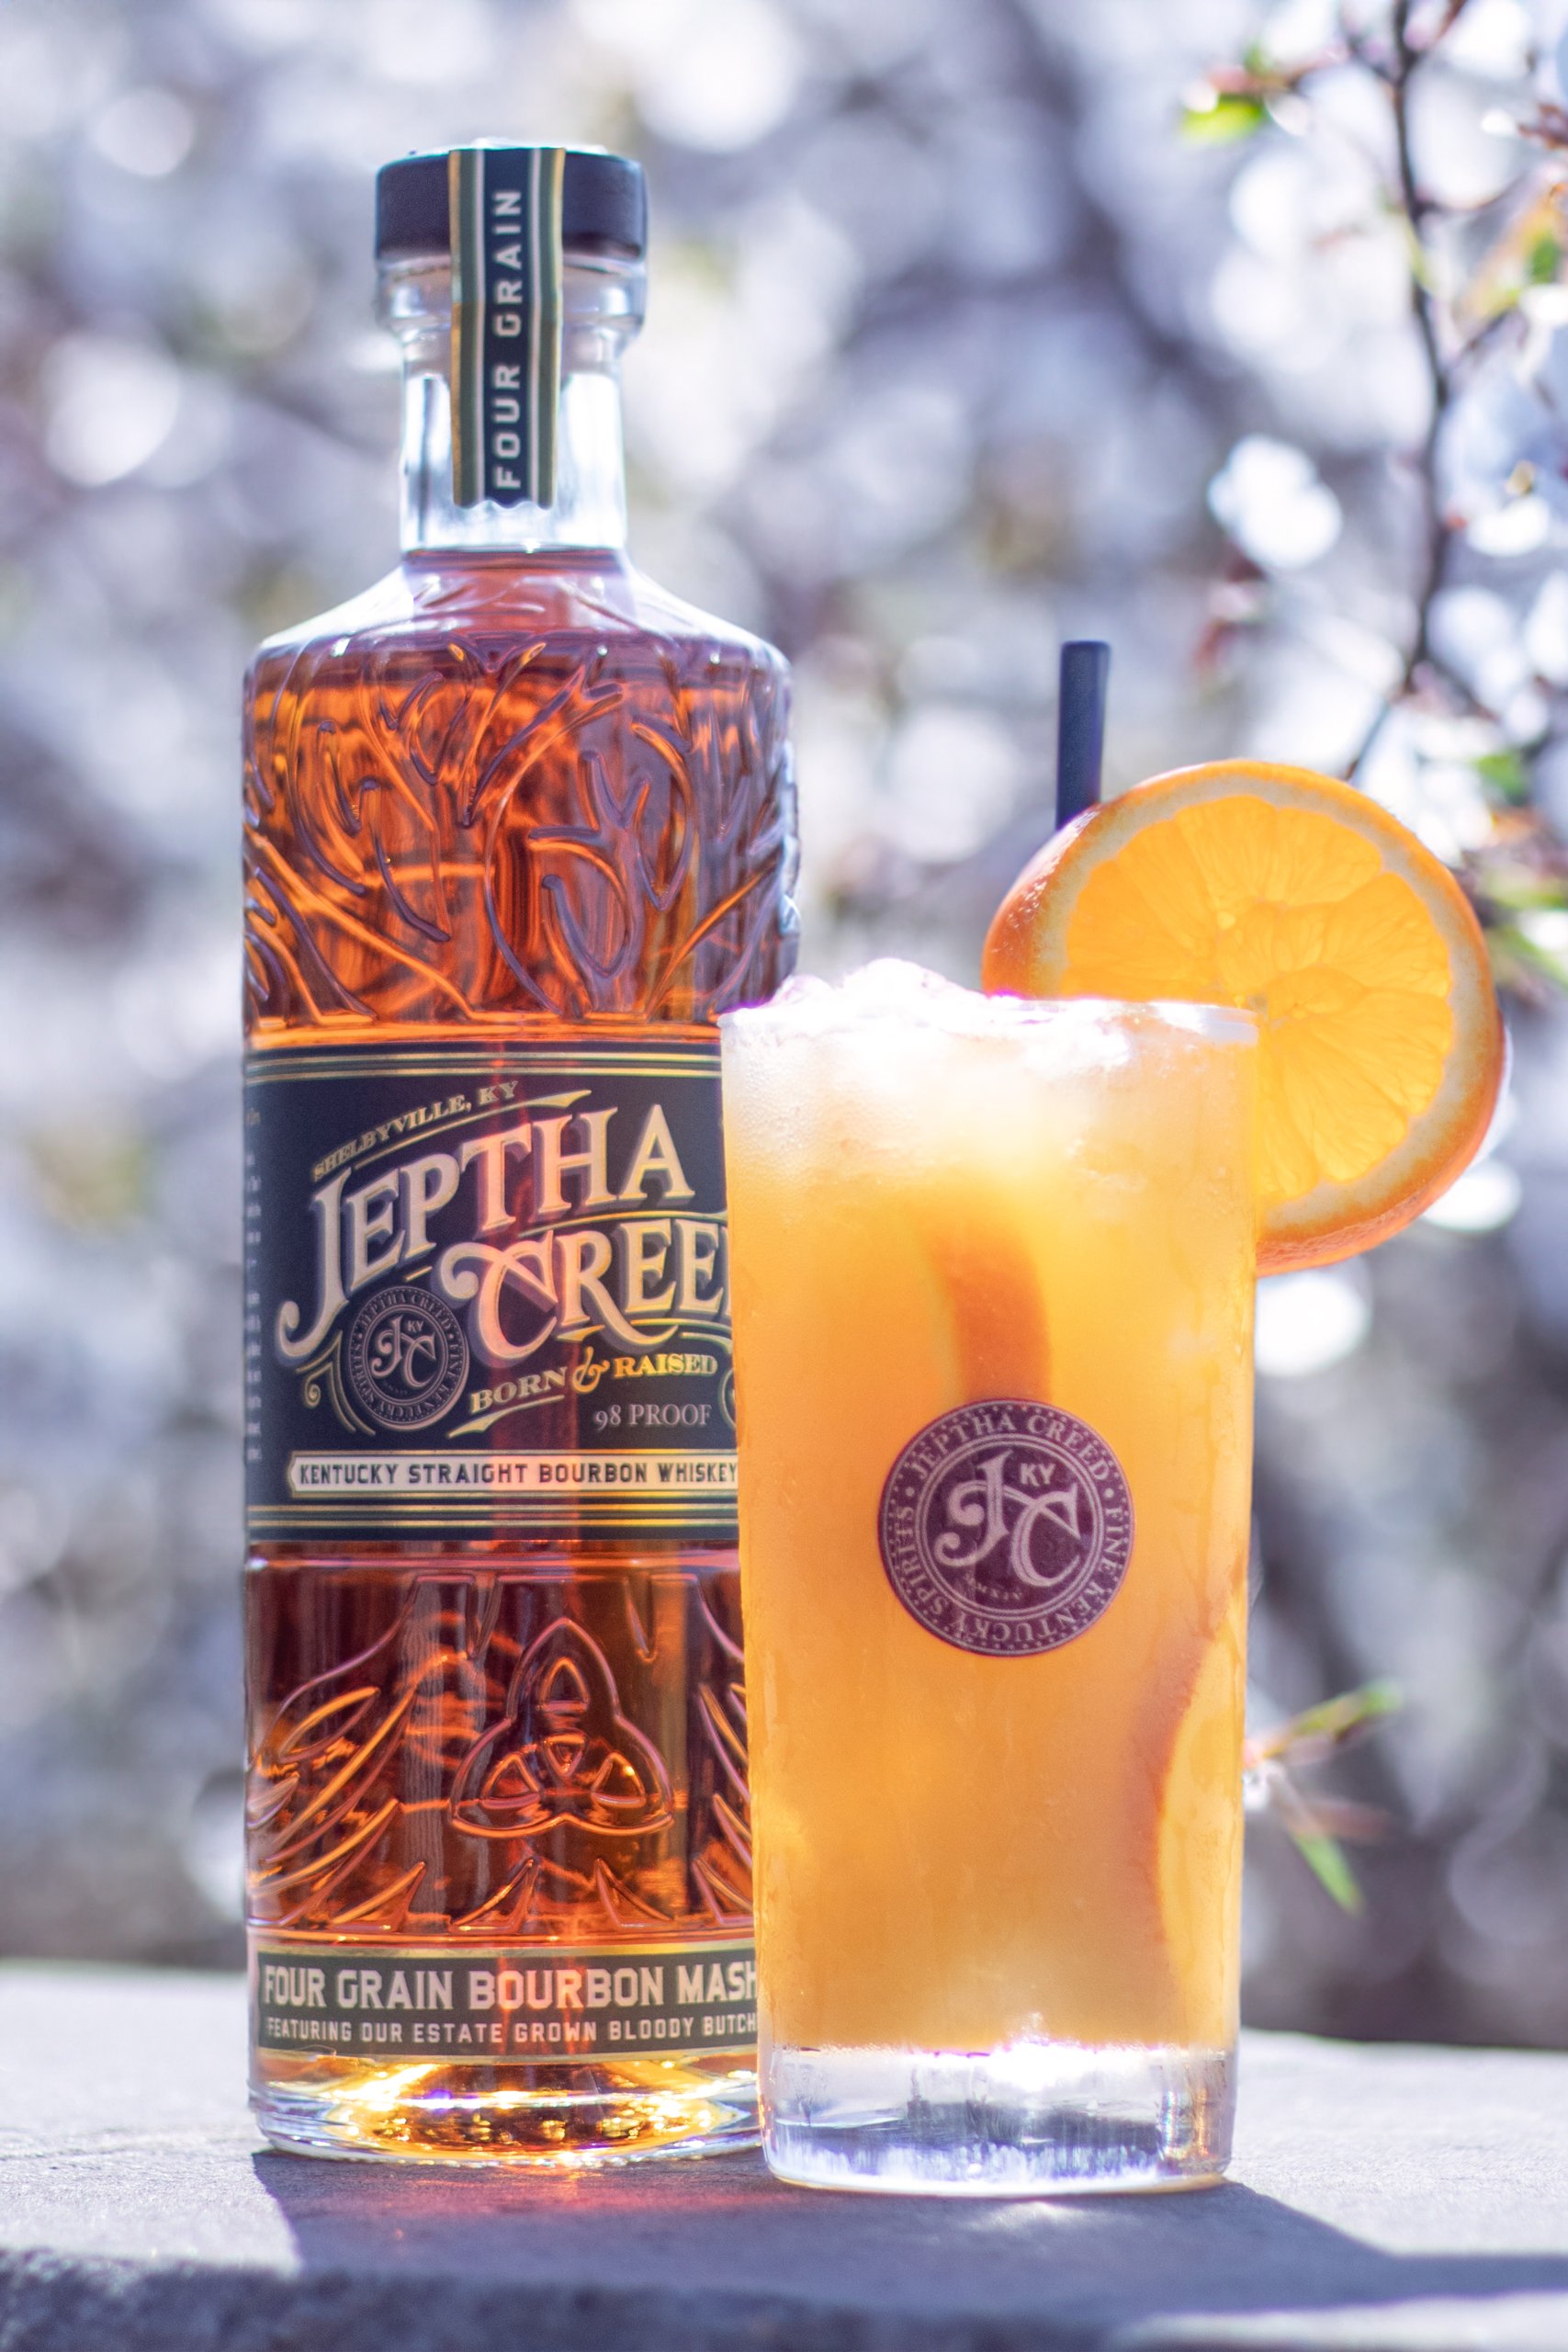 Jeptha Creed's Photo Finish cocktail. Image courtesy Jeptha Creed Distillery.